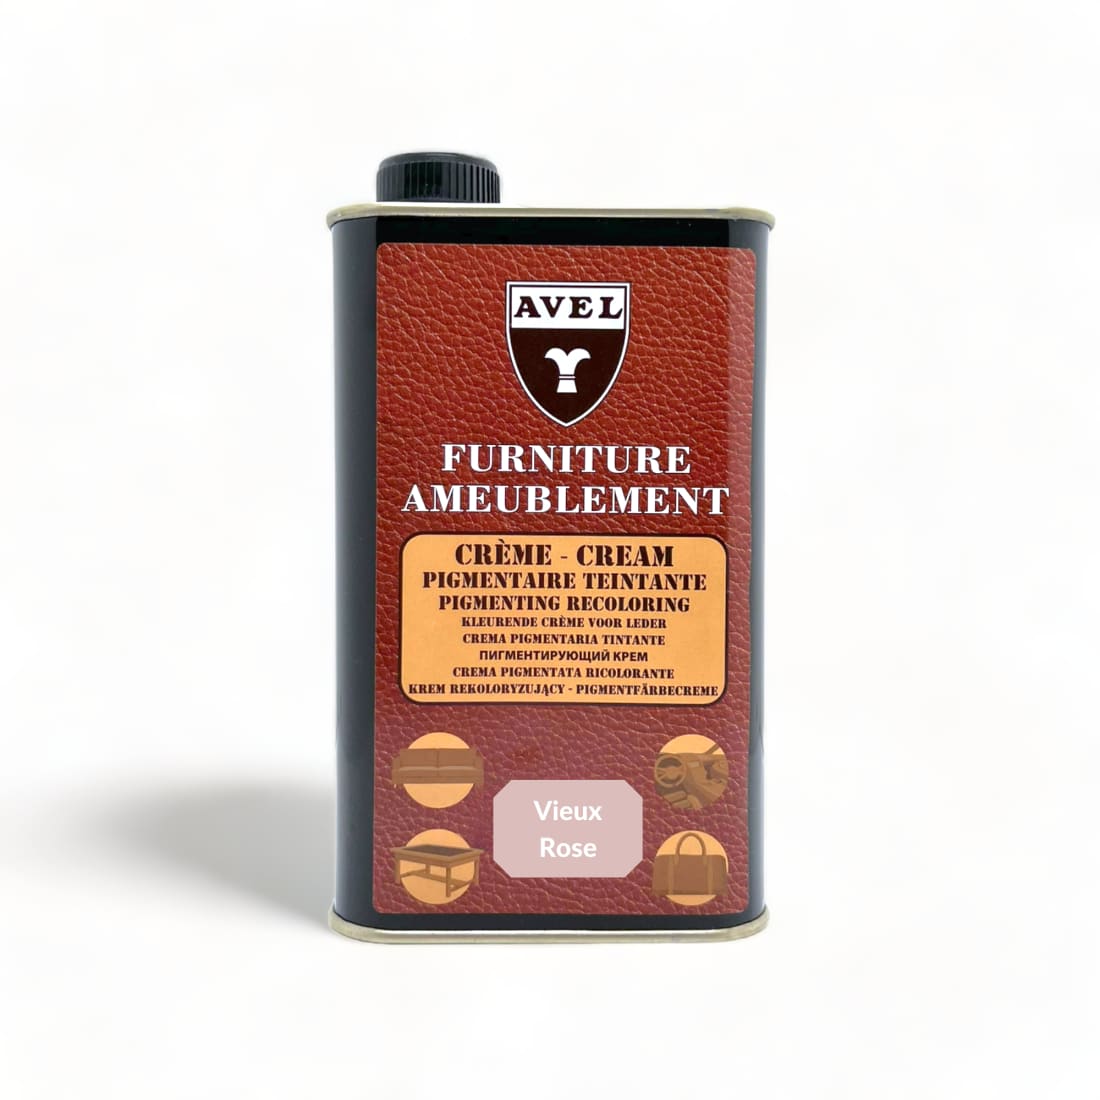 Crème Pigmentaire Teintante Vieux Rose - Avel - 375 ml -